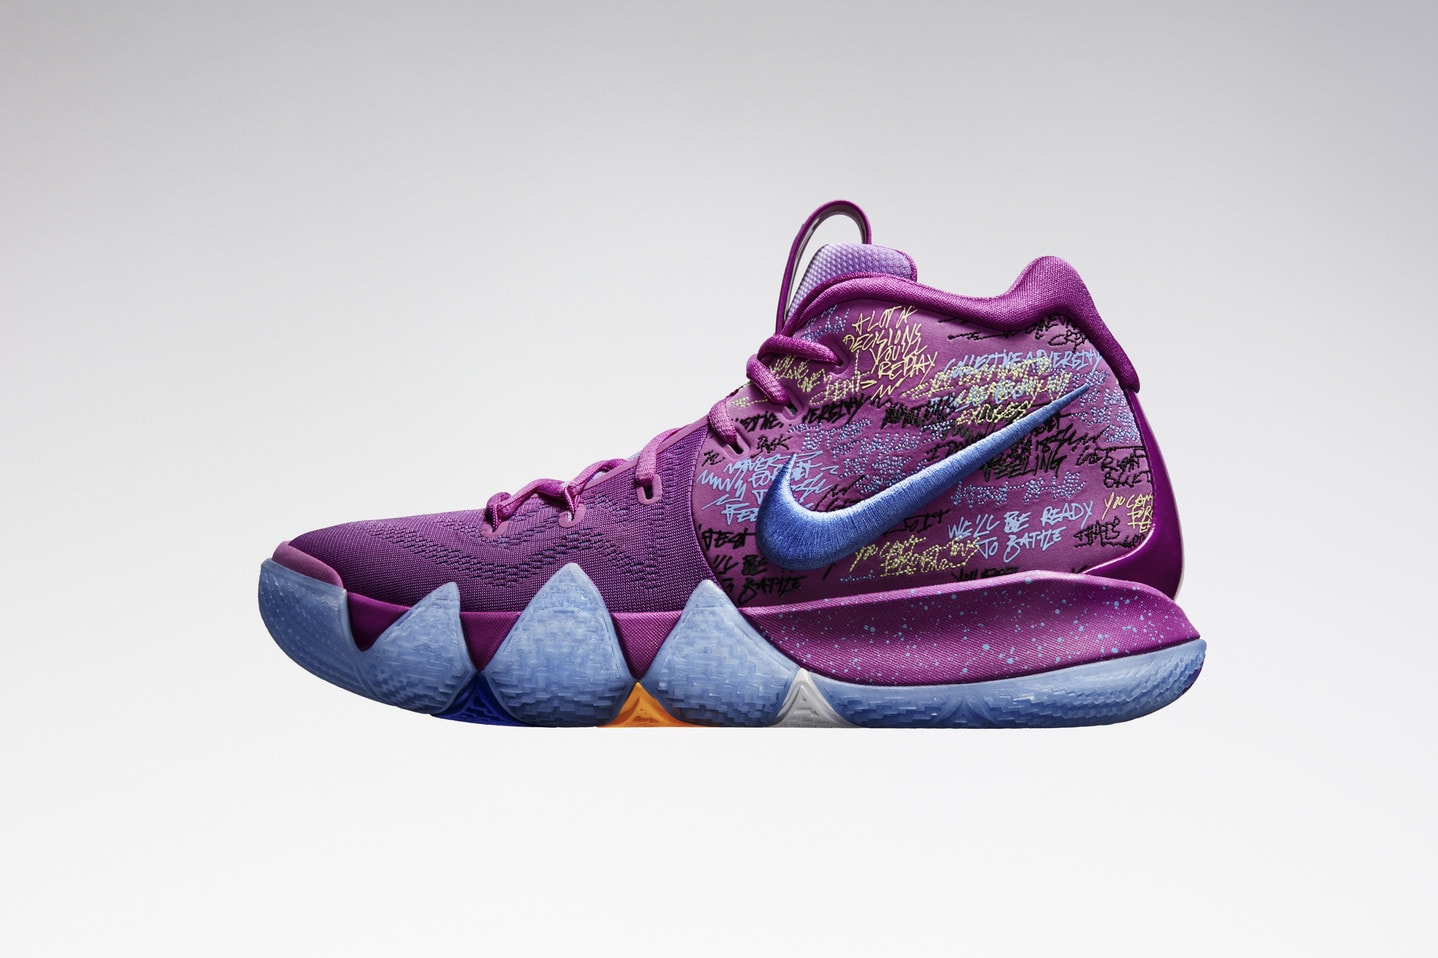 Nike Kyrie 4 Finally Revealed reveal Irving Basketball footwear sneakers kicks court black white silver purple green boston celtics